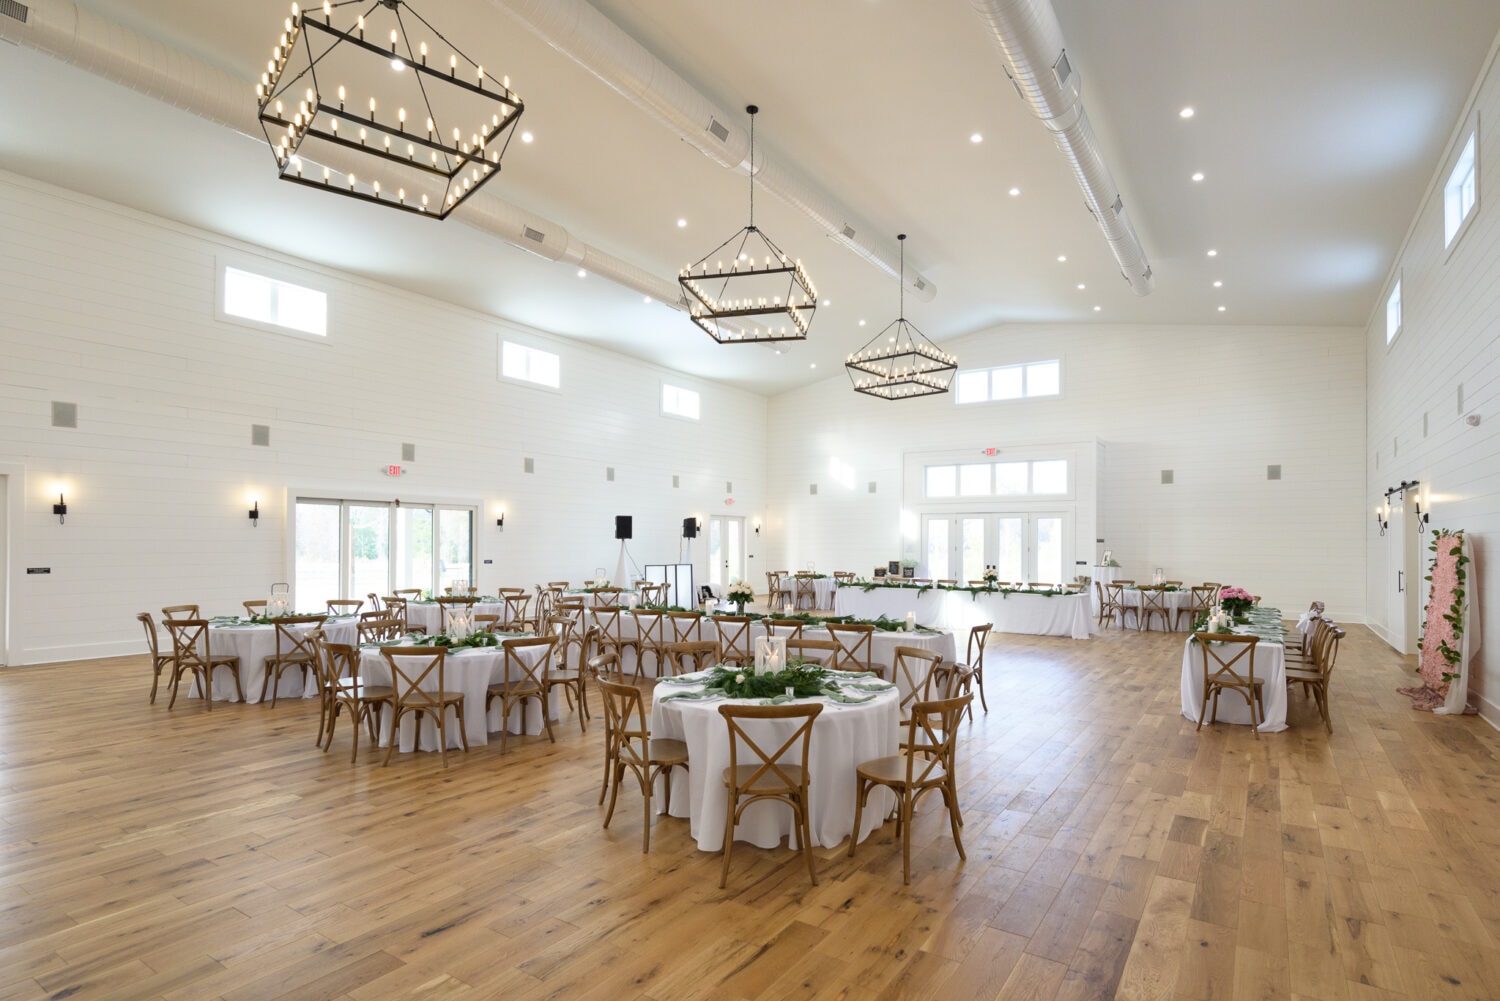 Wide angle shots of venue ballroom - The Venue at White Oaks Farm